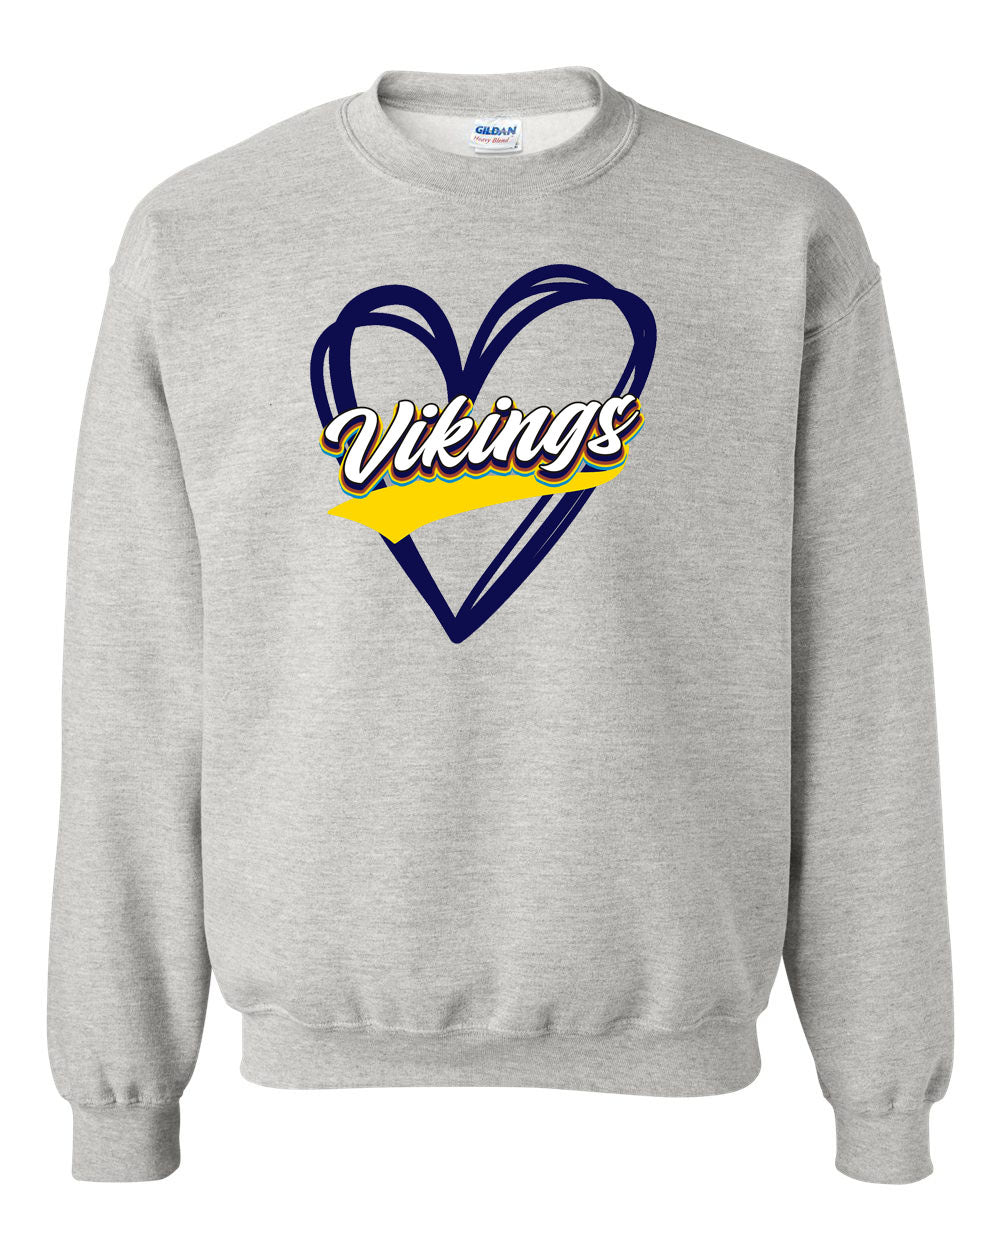 Vernon design 1 non hooded sweatshirt